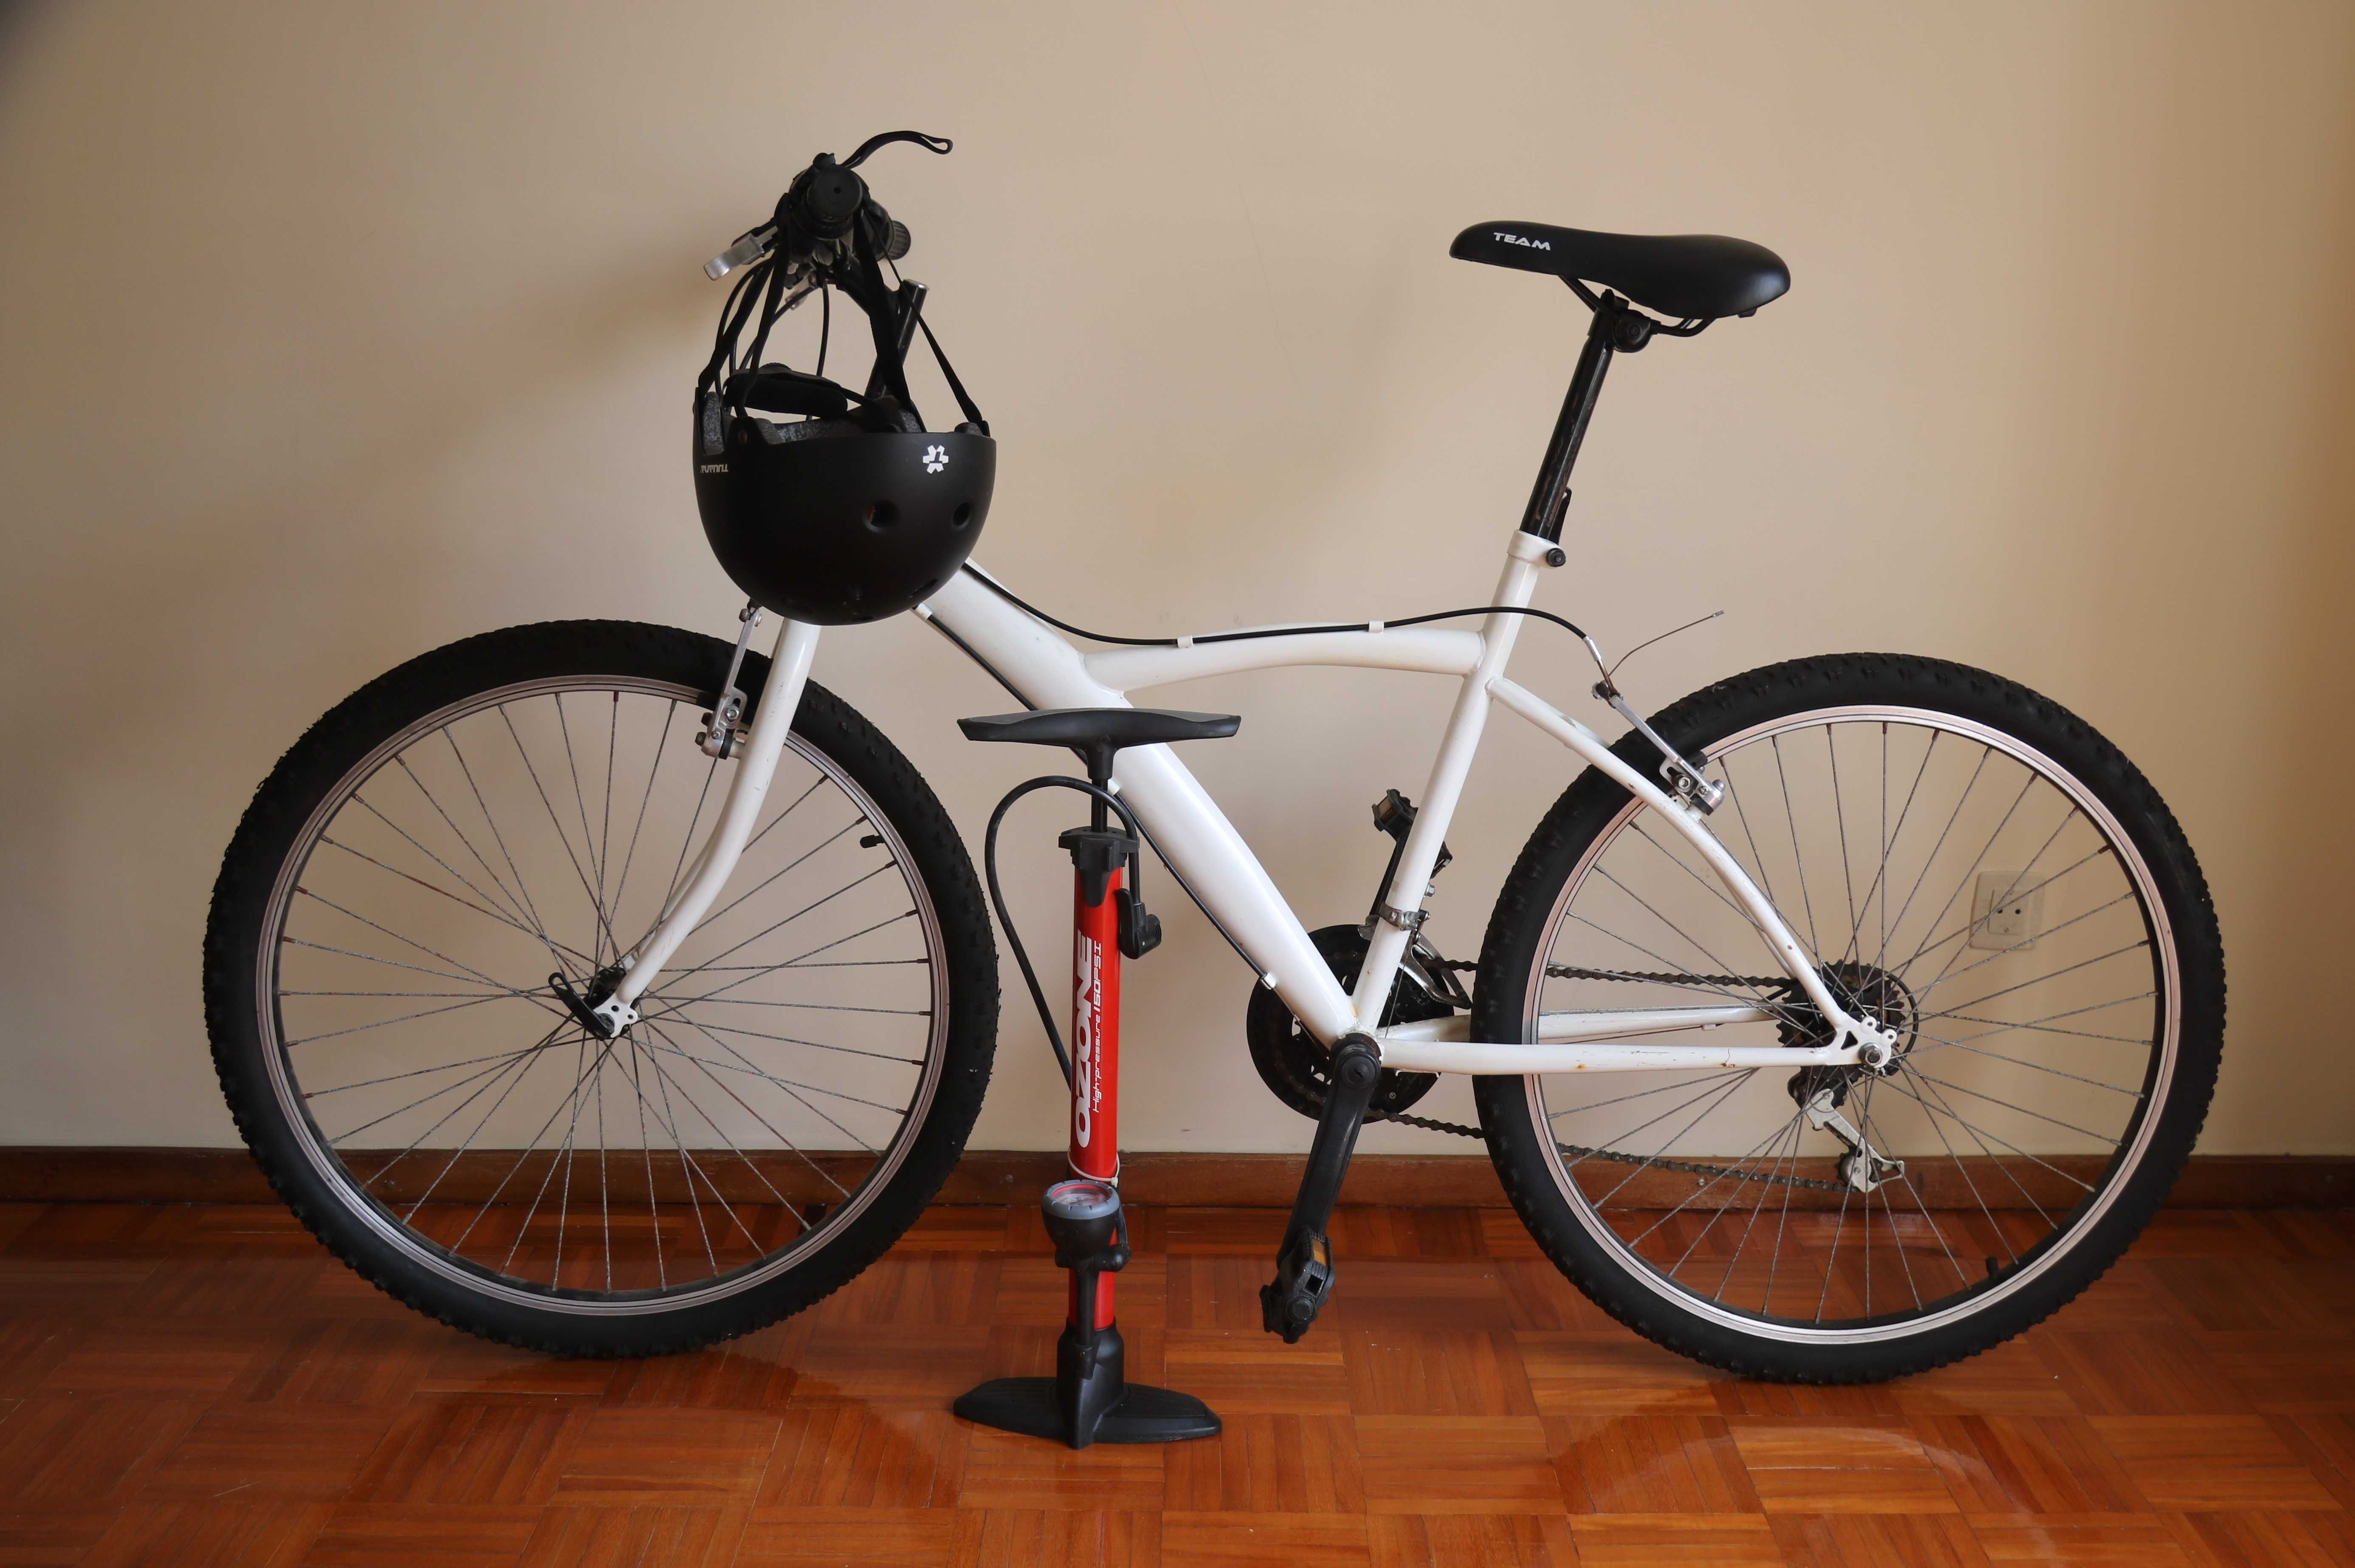 Bicicleta + bomba de ar + capacete